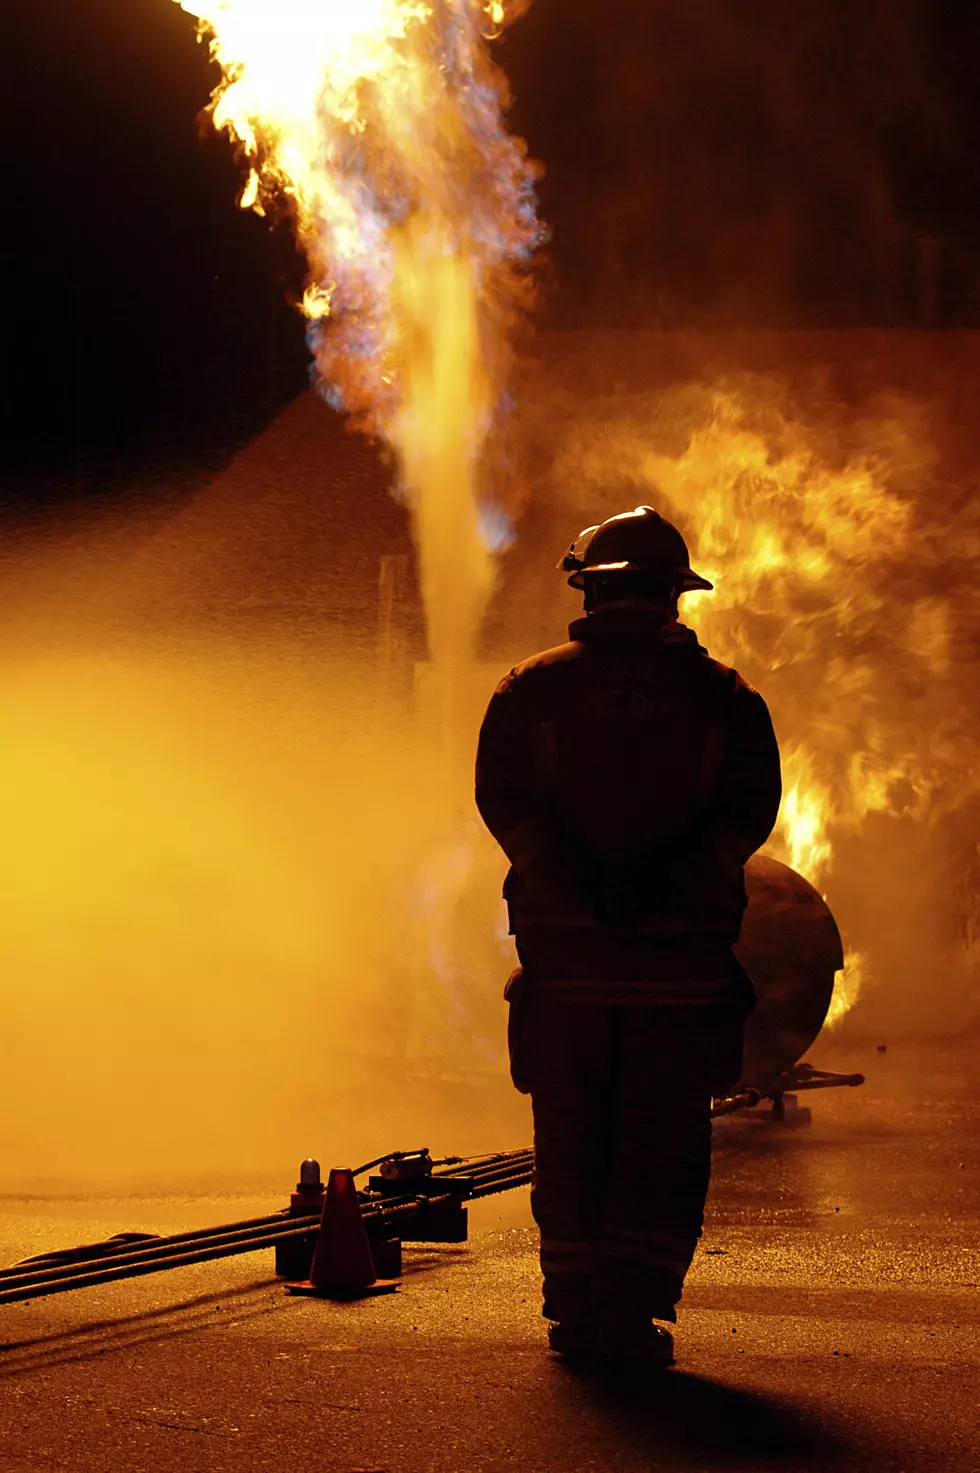 Fire Destroys Motorhome, Melts Adjacent Home Siding